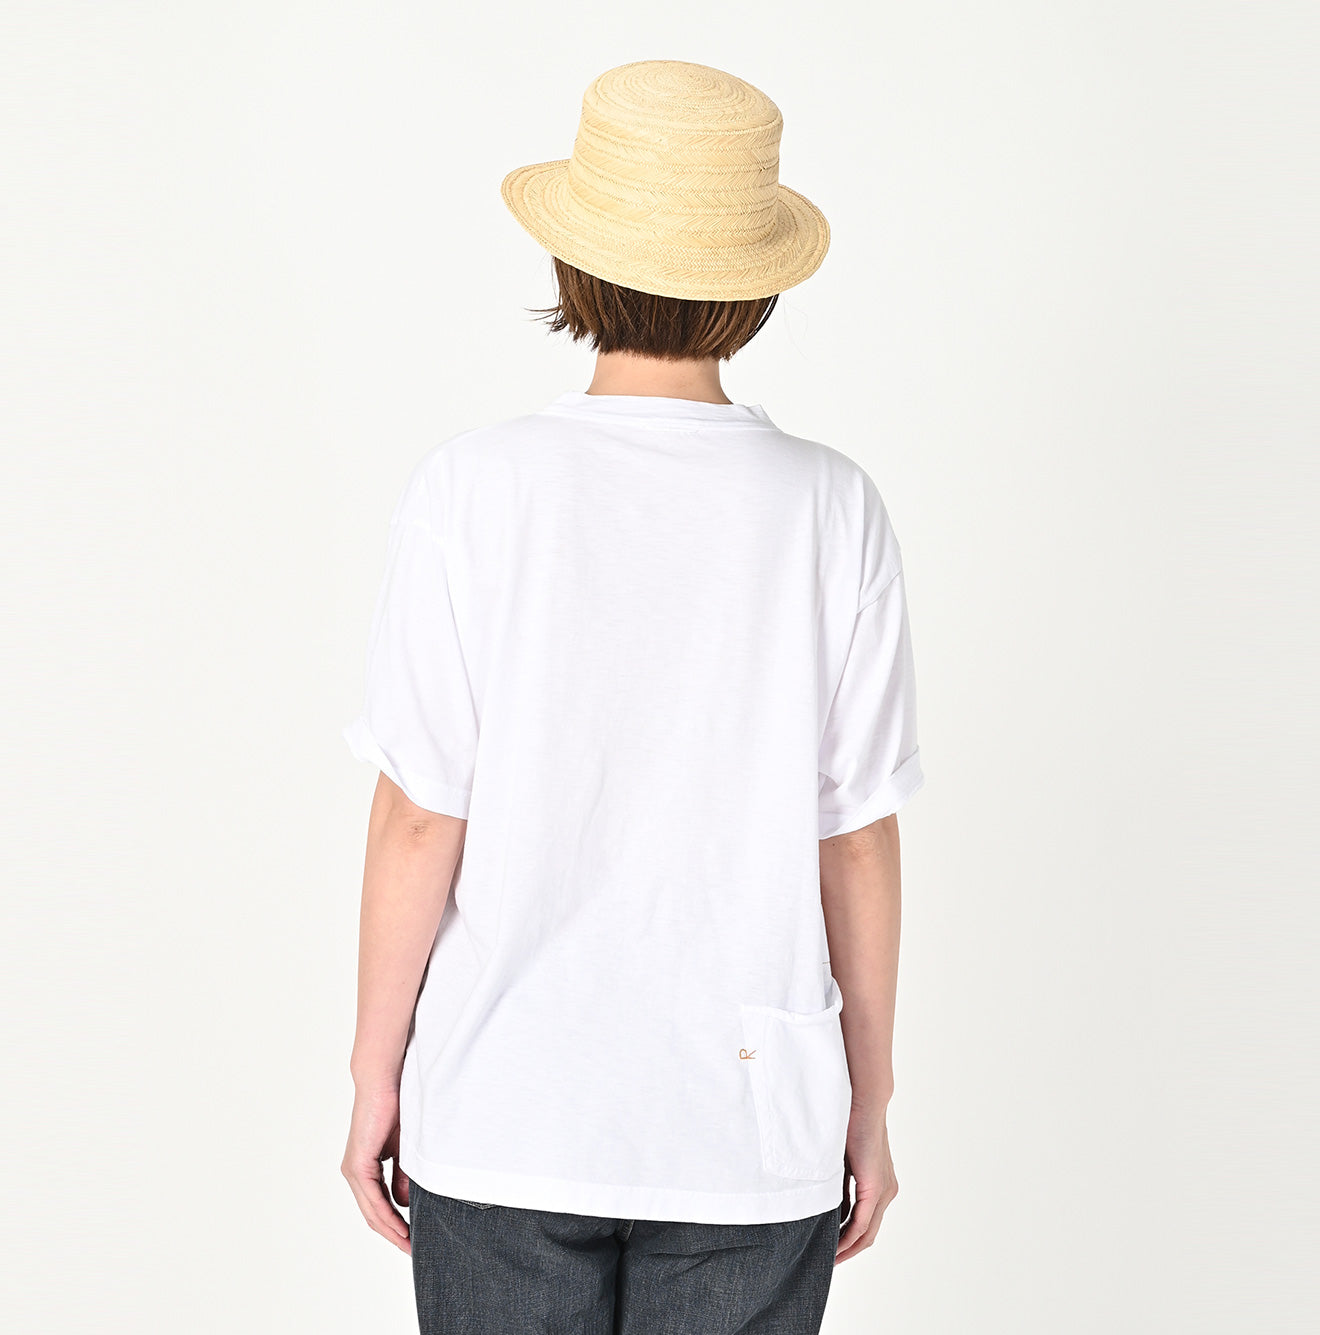 908 Supima Tenjiku Ocean T-shirt